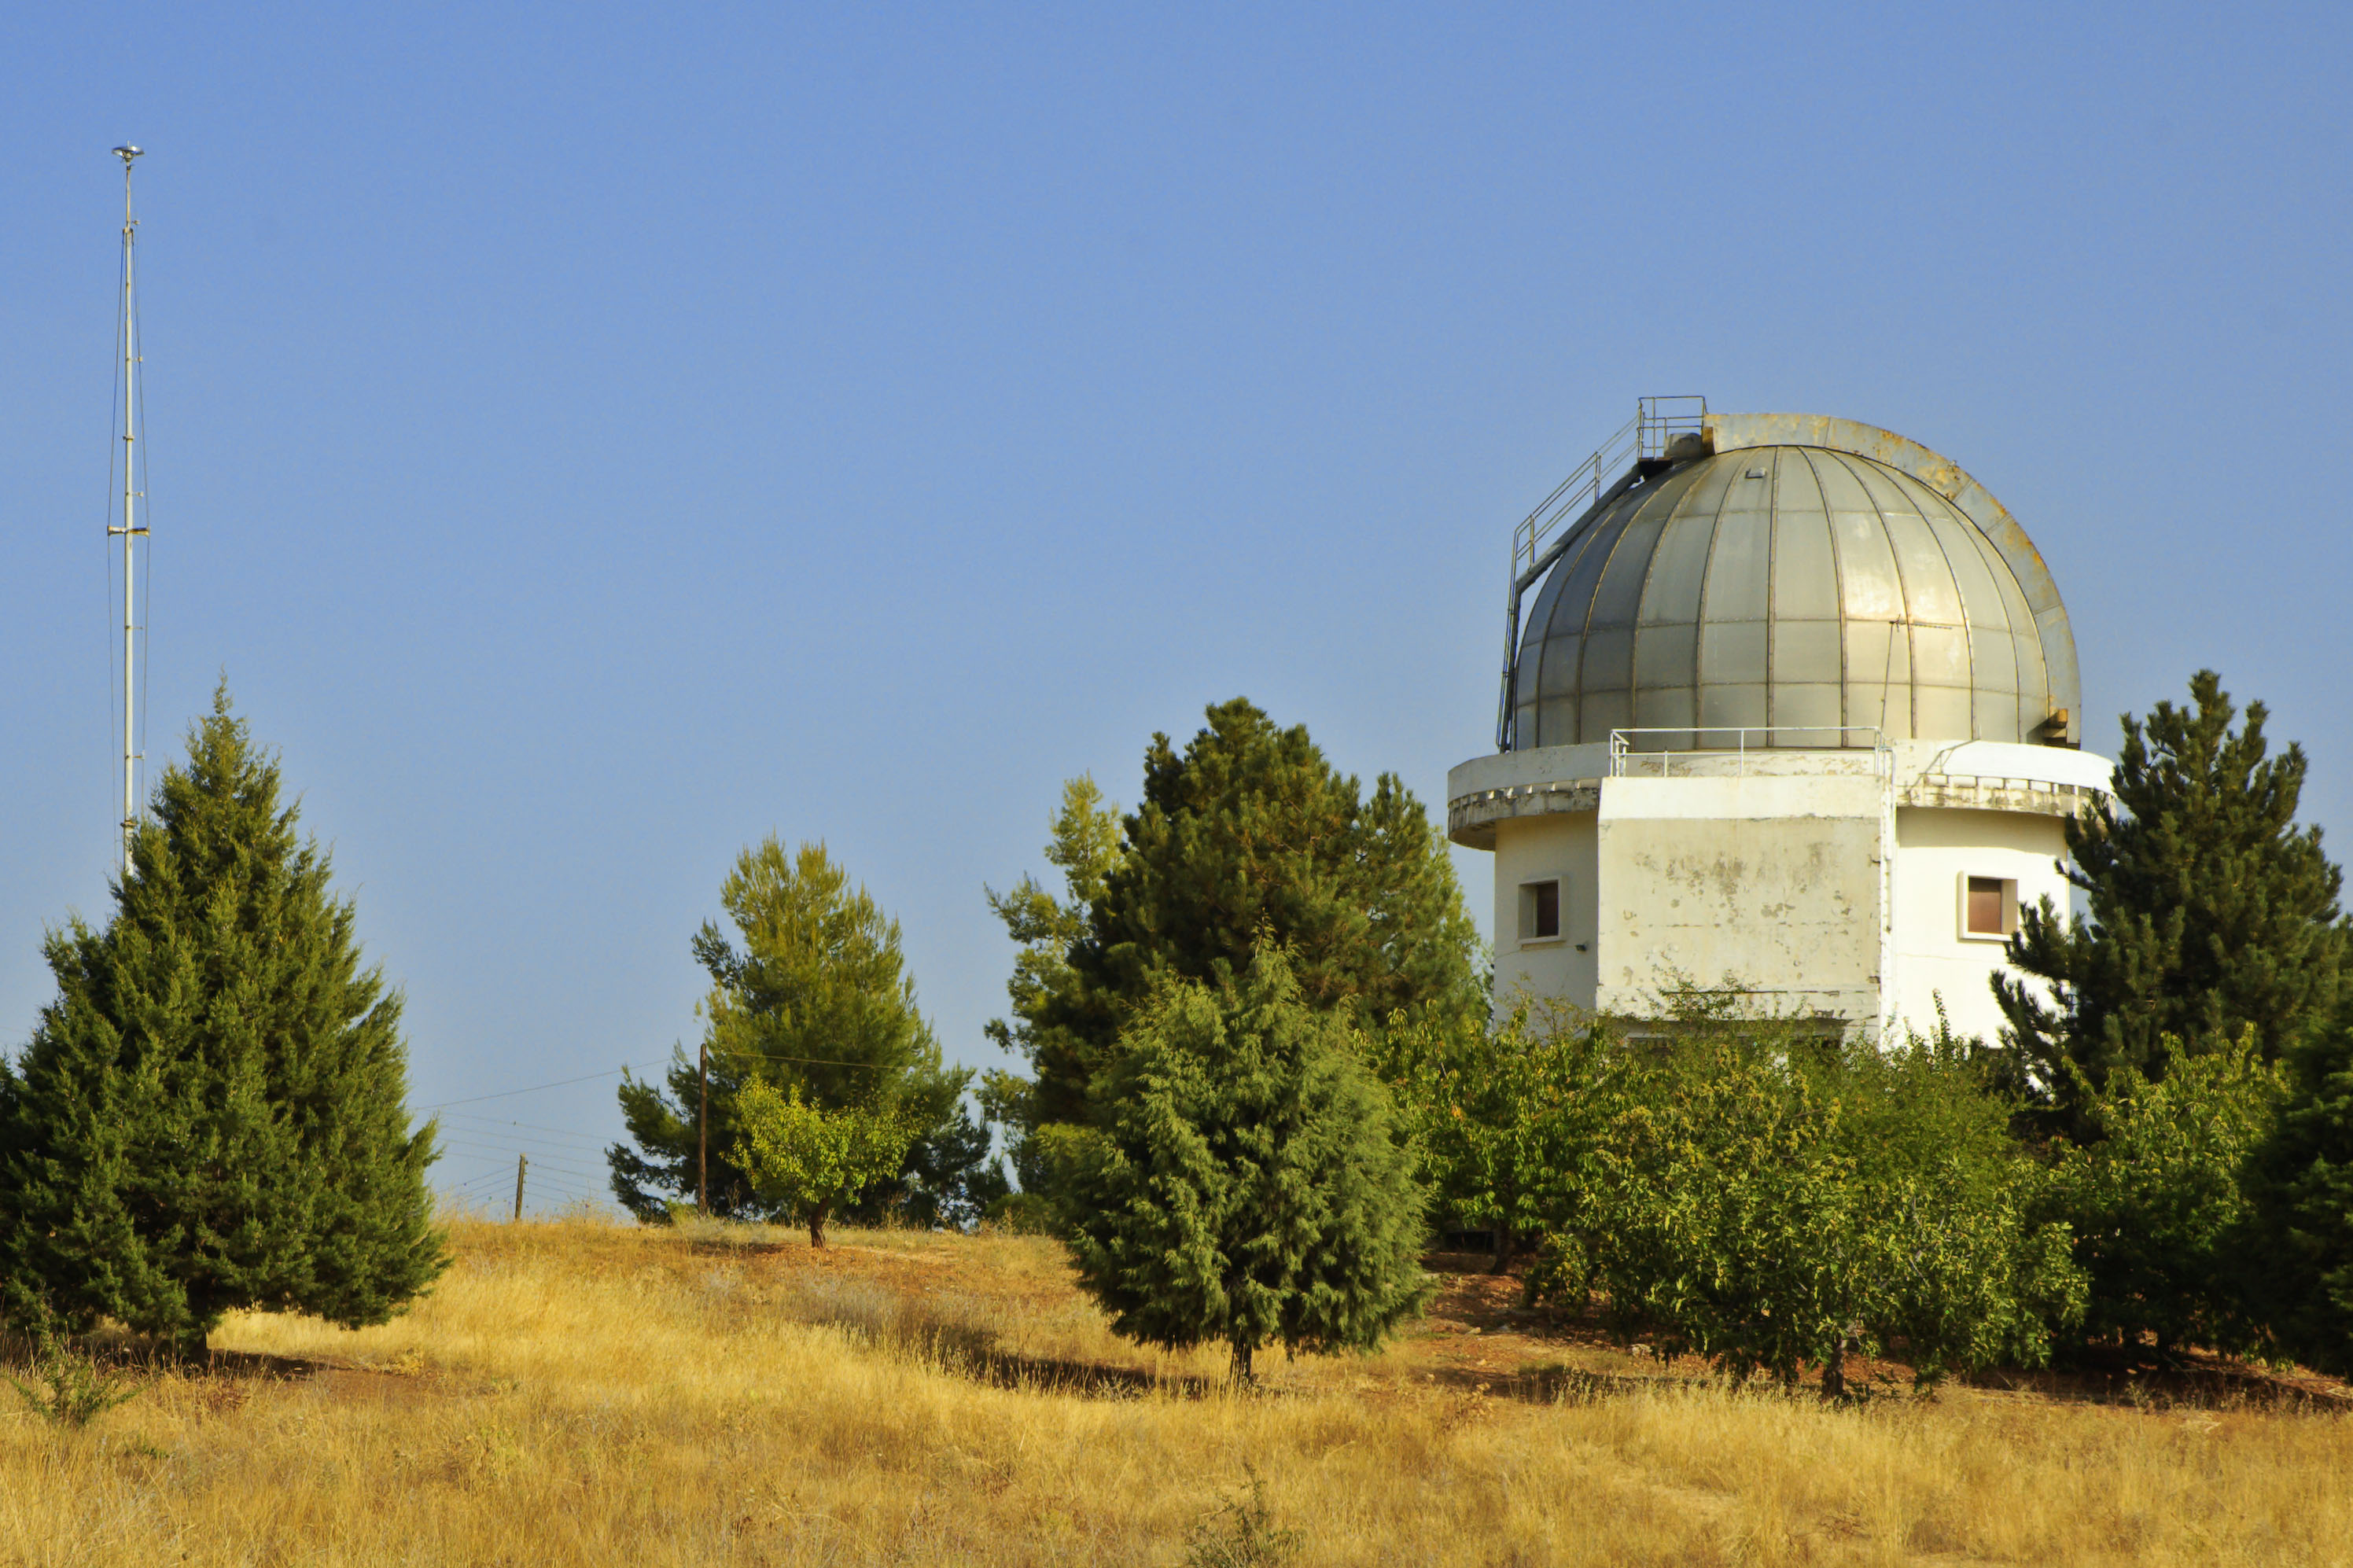 observatories